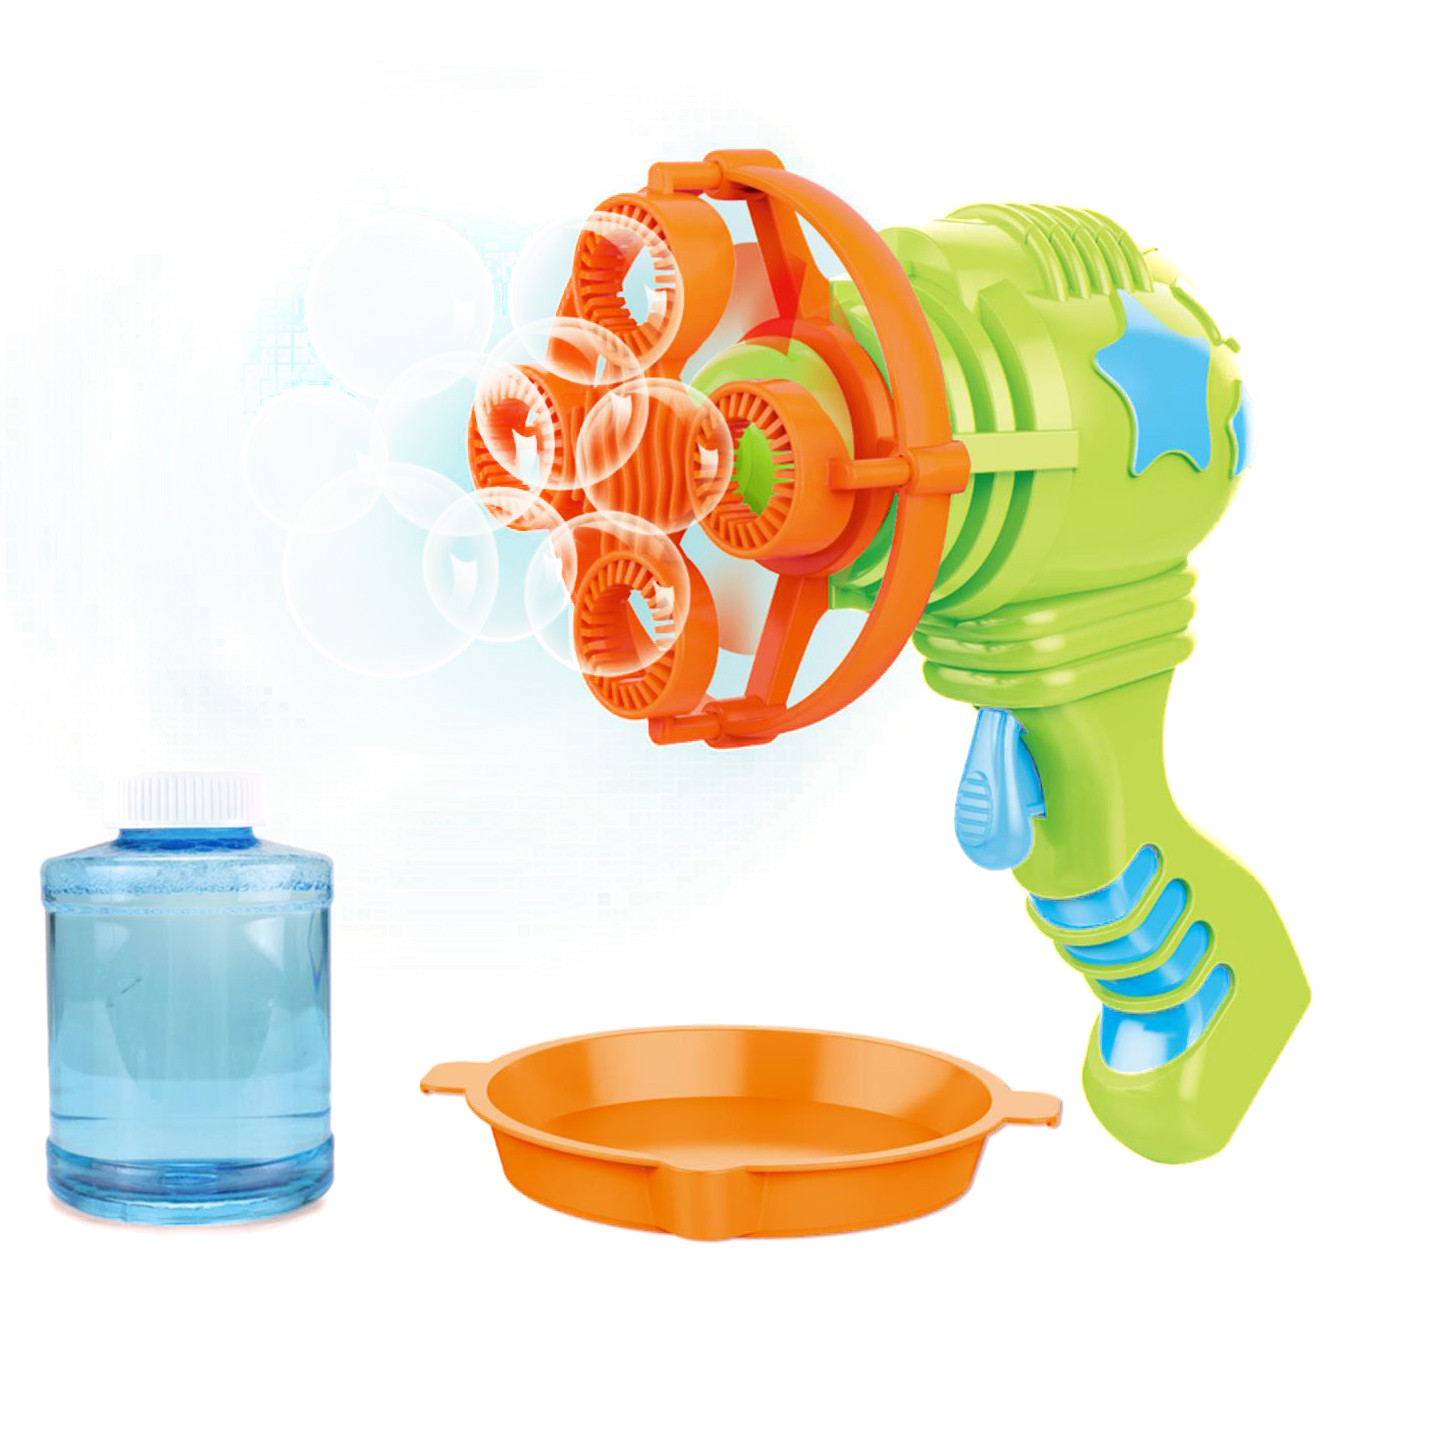 Bubble gun with bubble blower